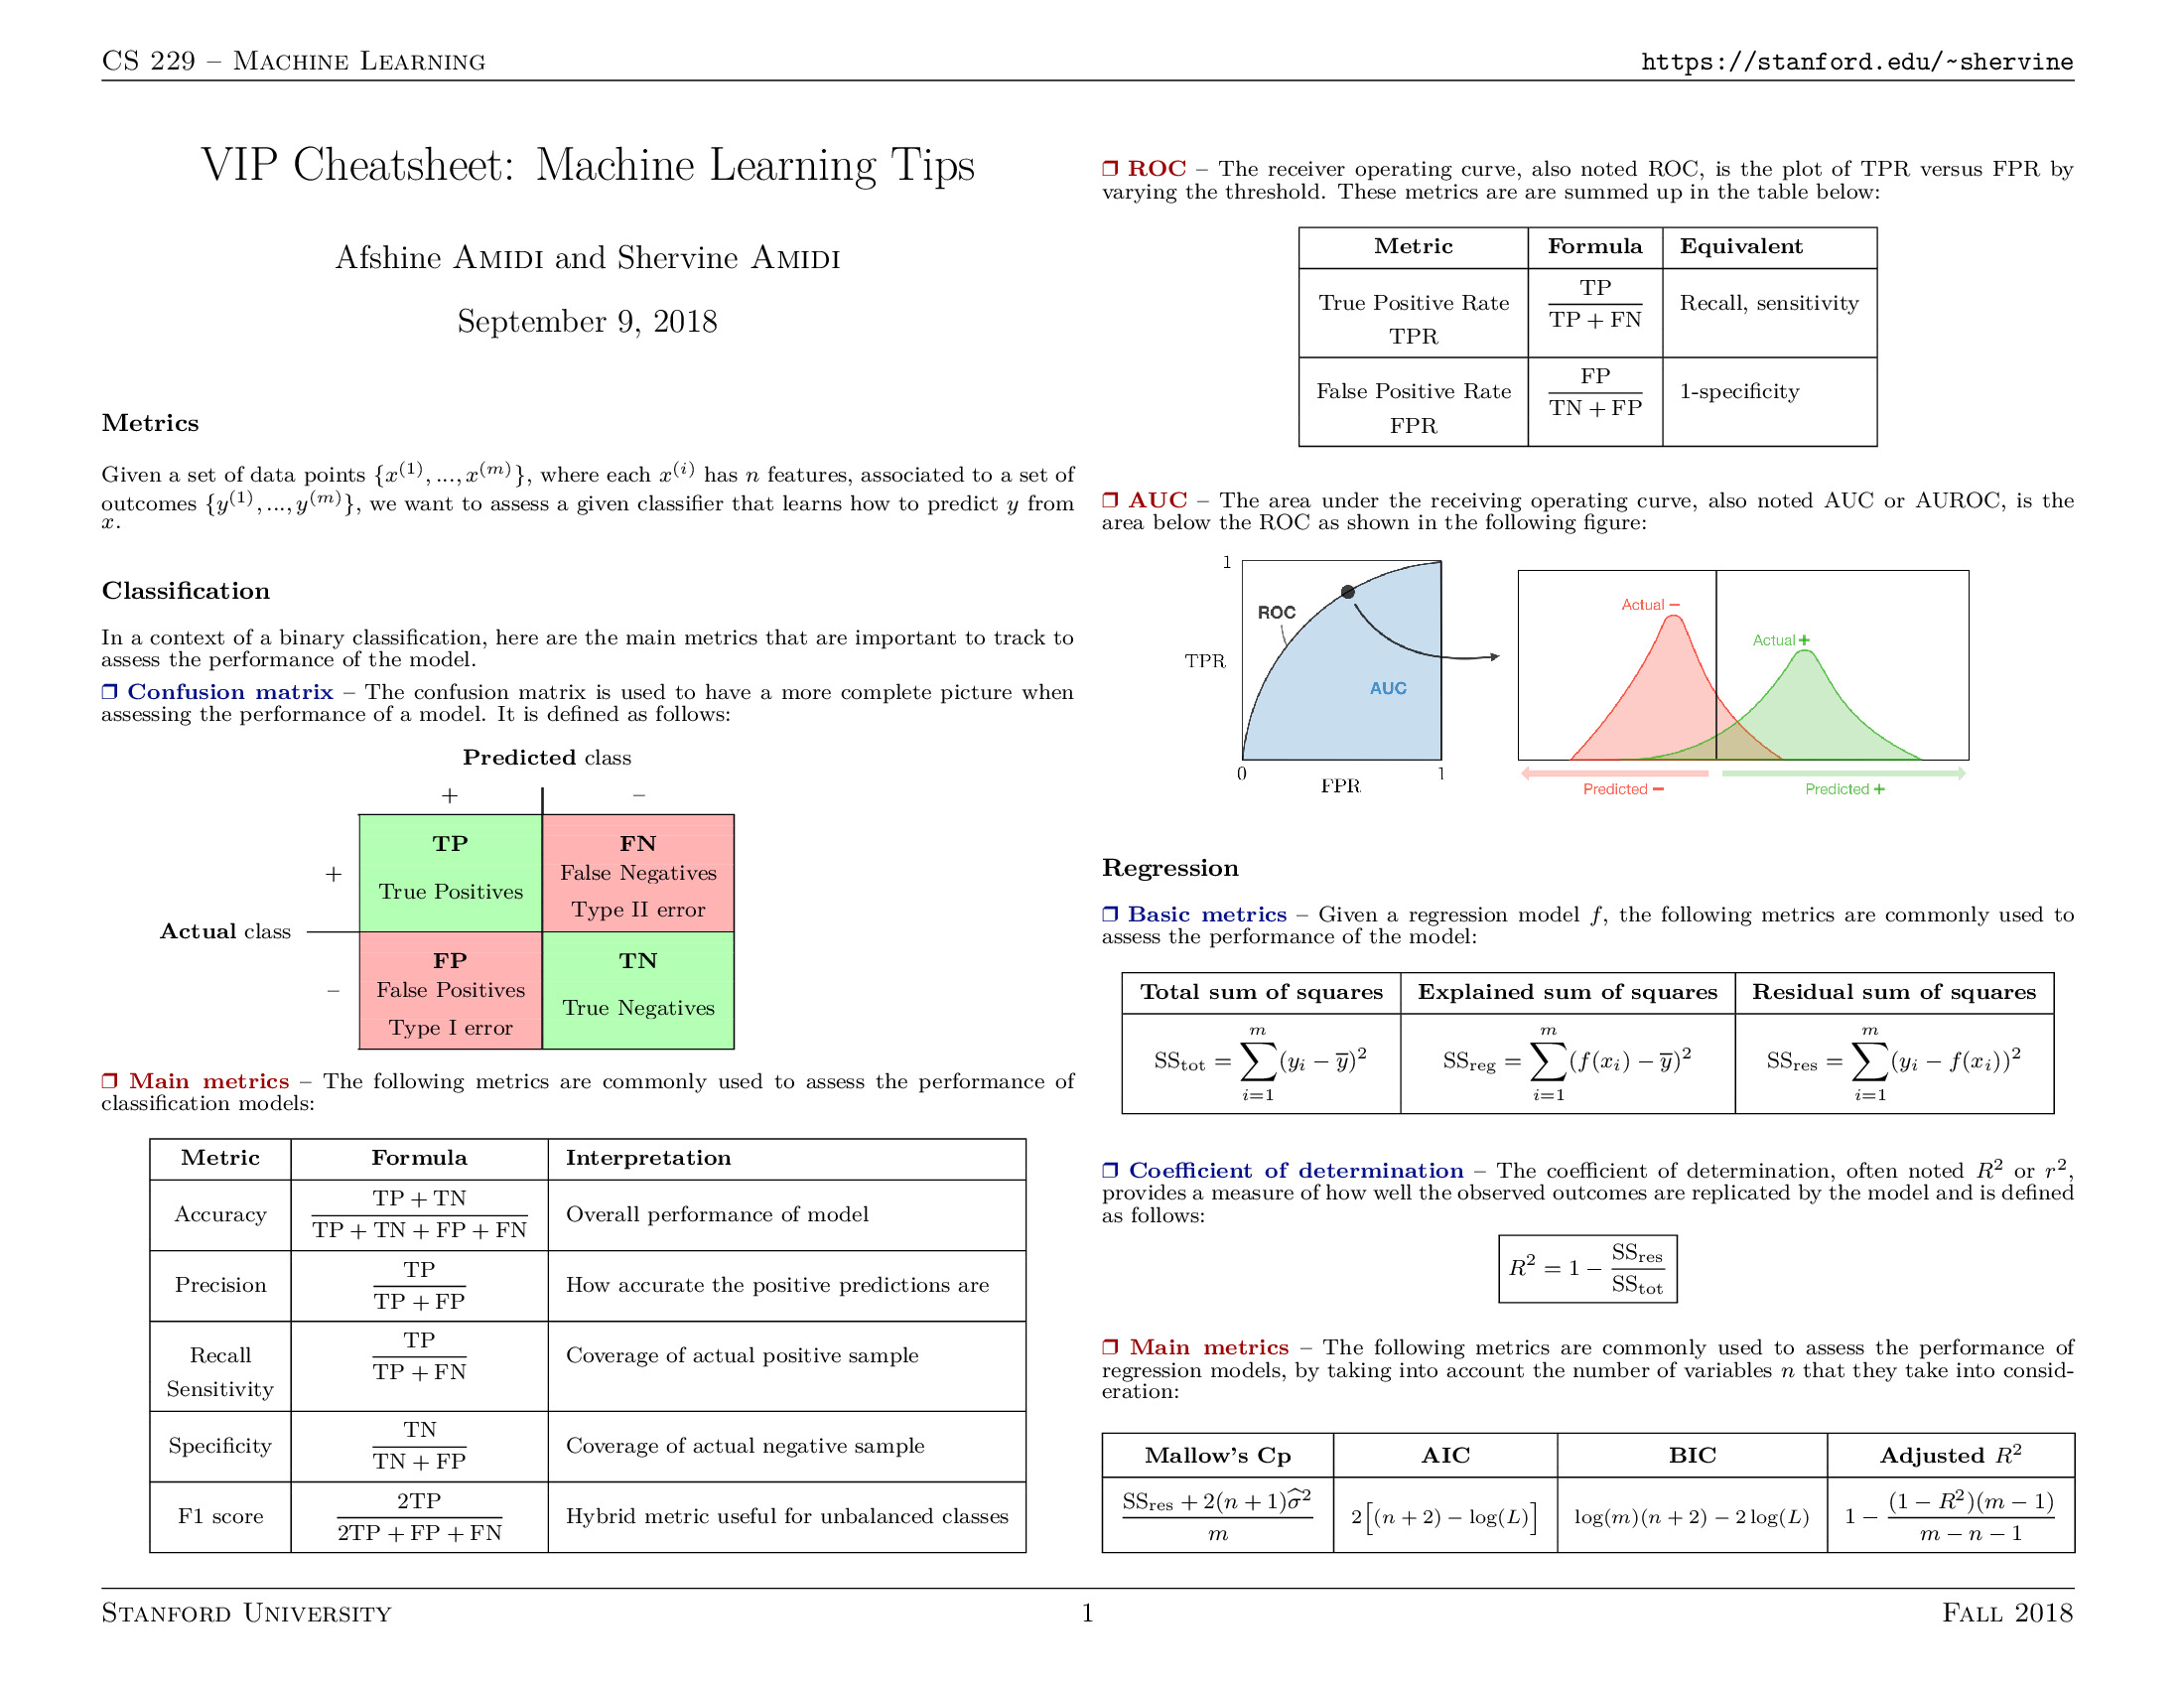 Stanford VIP Machine Learning Cheat Sheet pdf